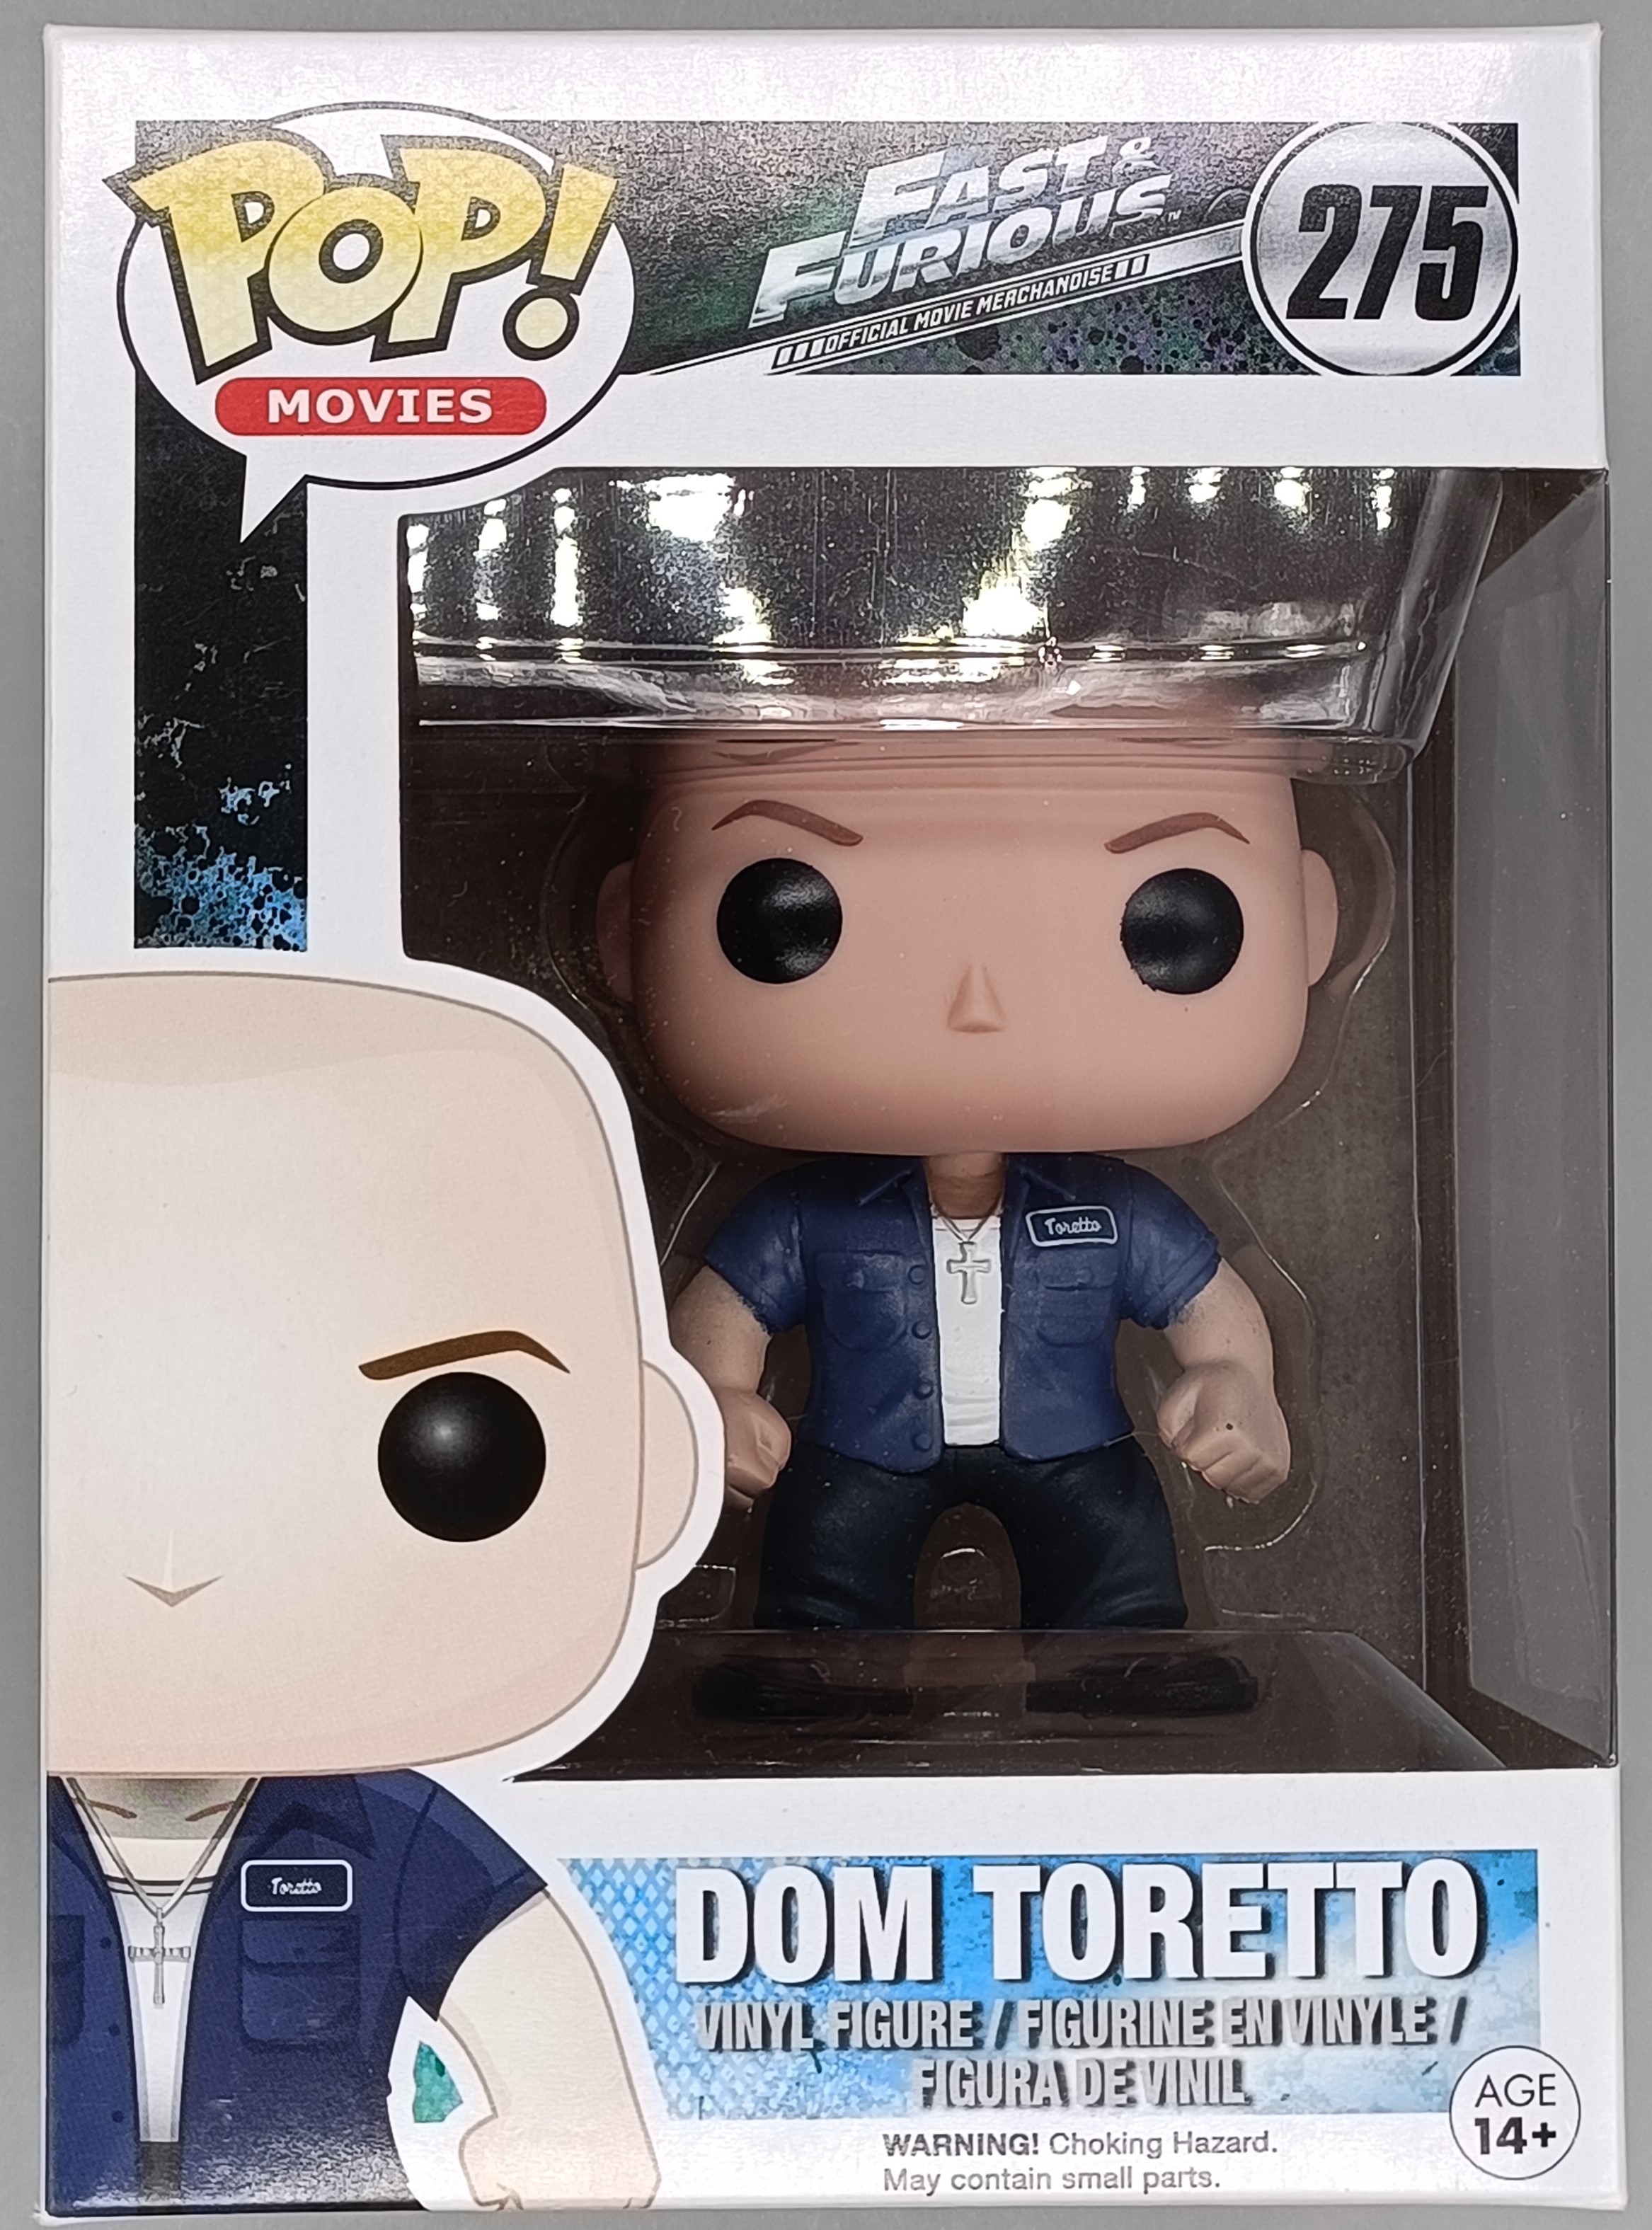 Figurine Fast and Furious - Dom Toretto Pop 10cm - Funko